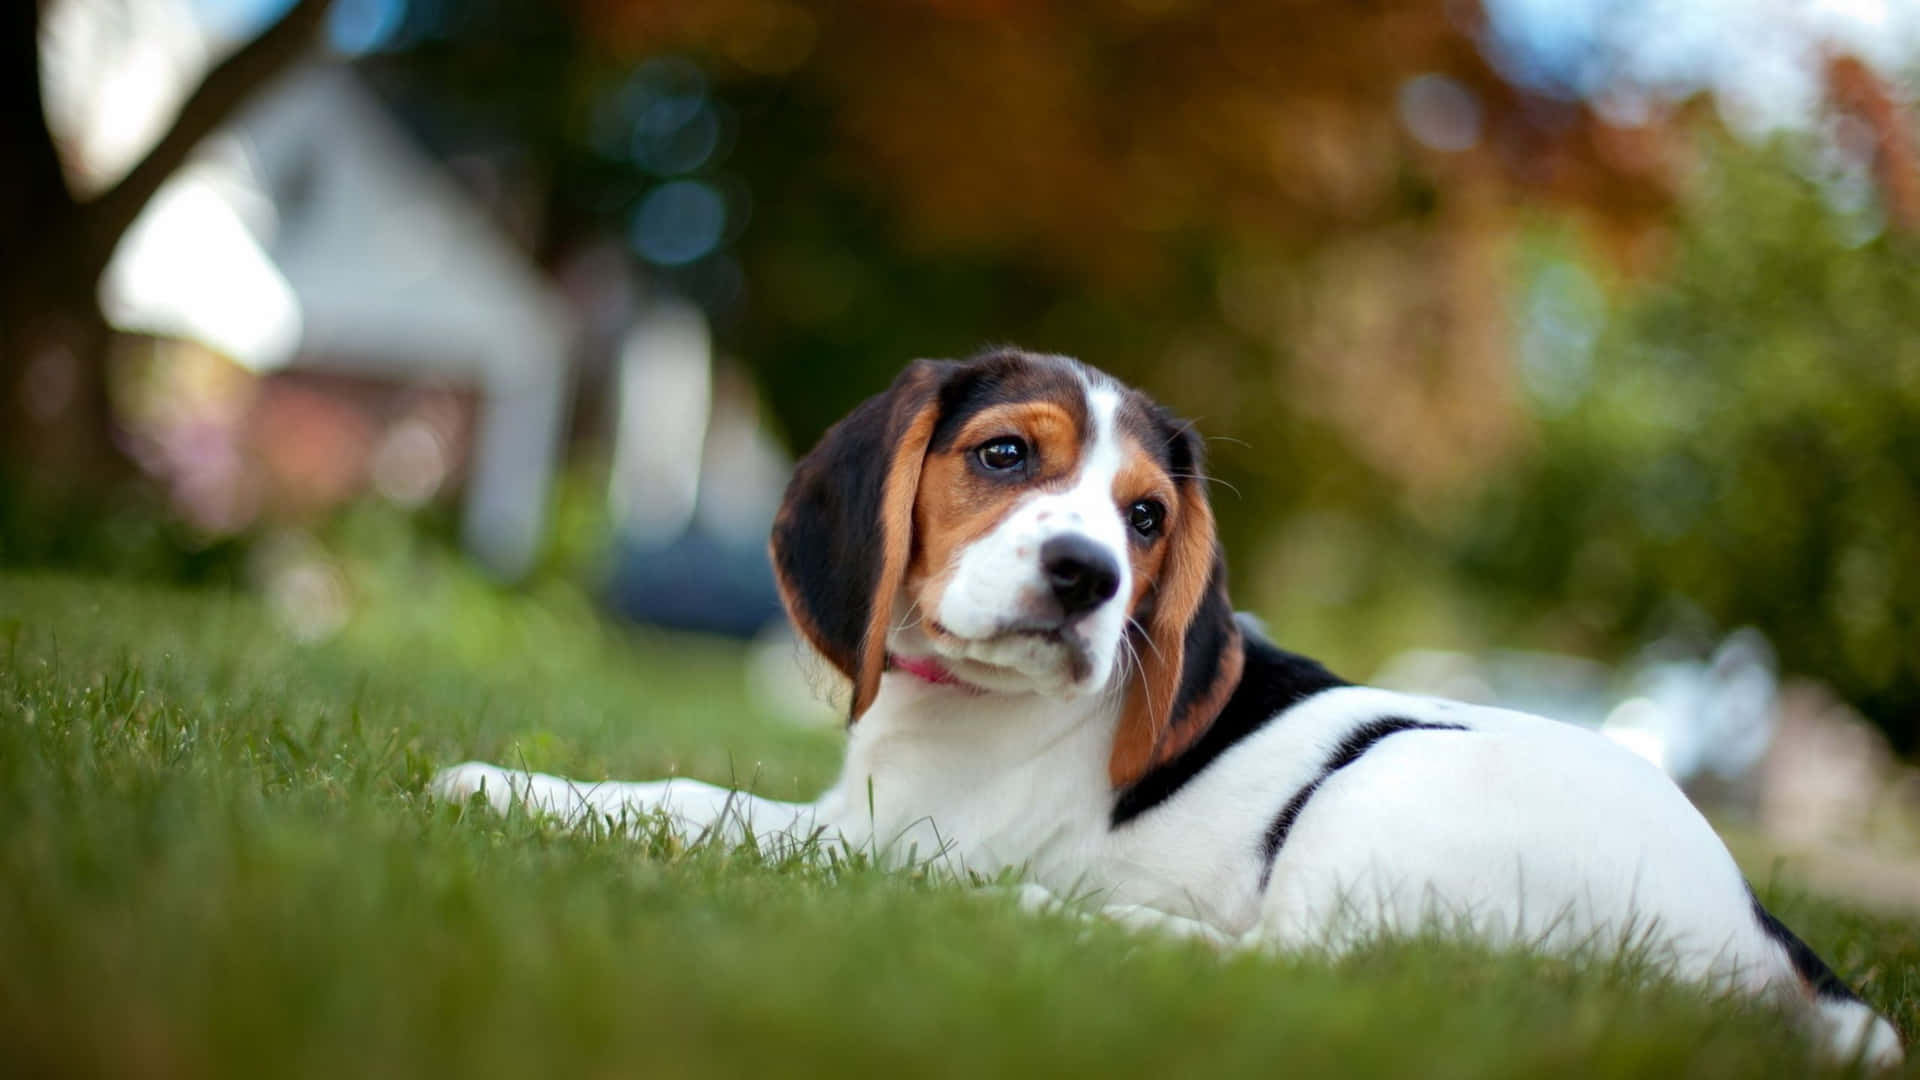 Cute beagle dog awaiting his next adventure.